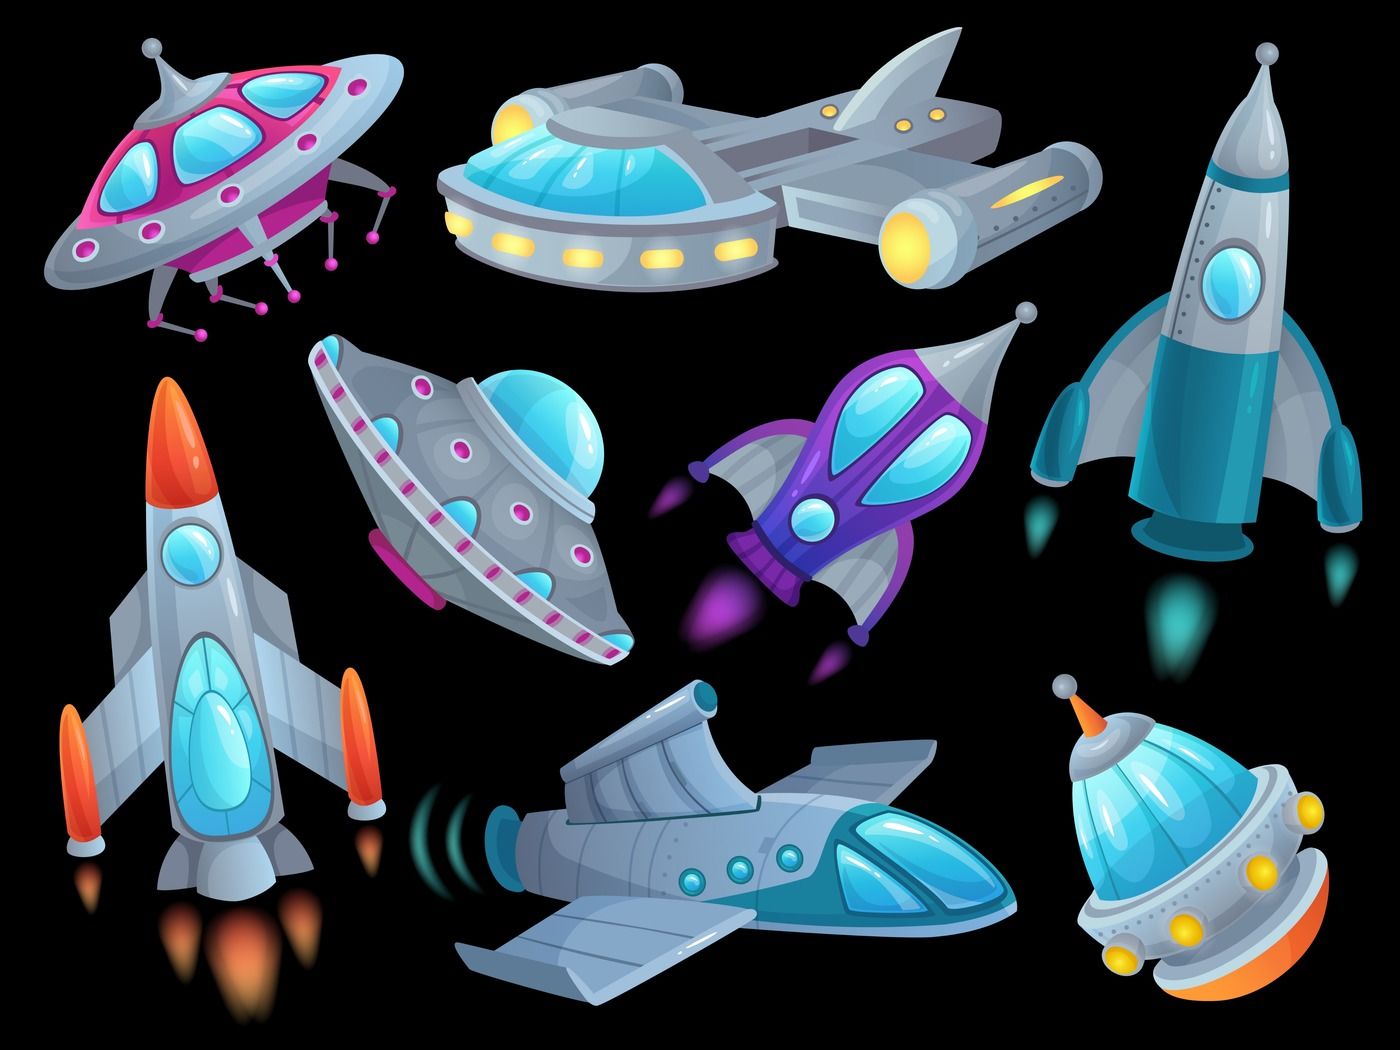 Space Rocket Cartoon Images.